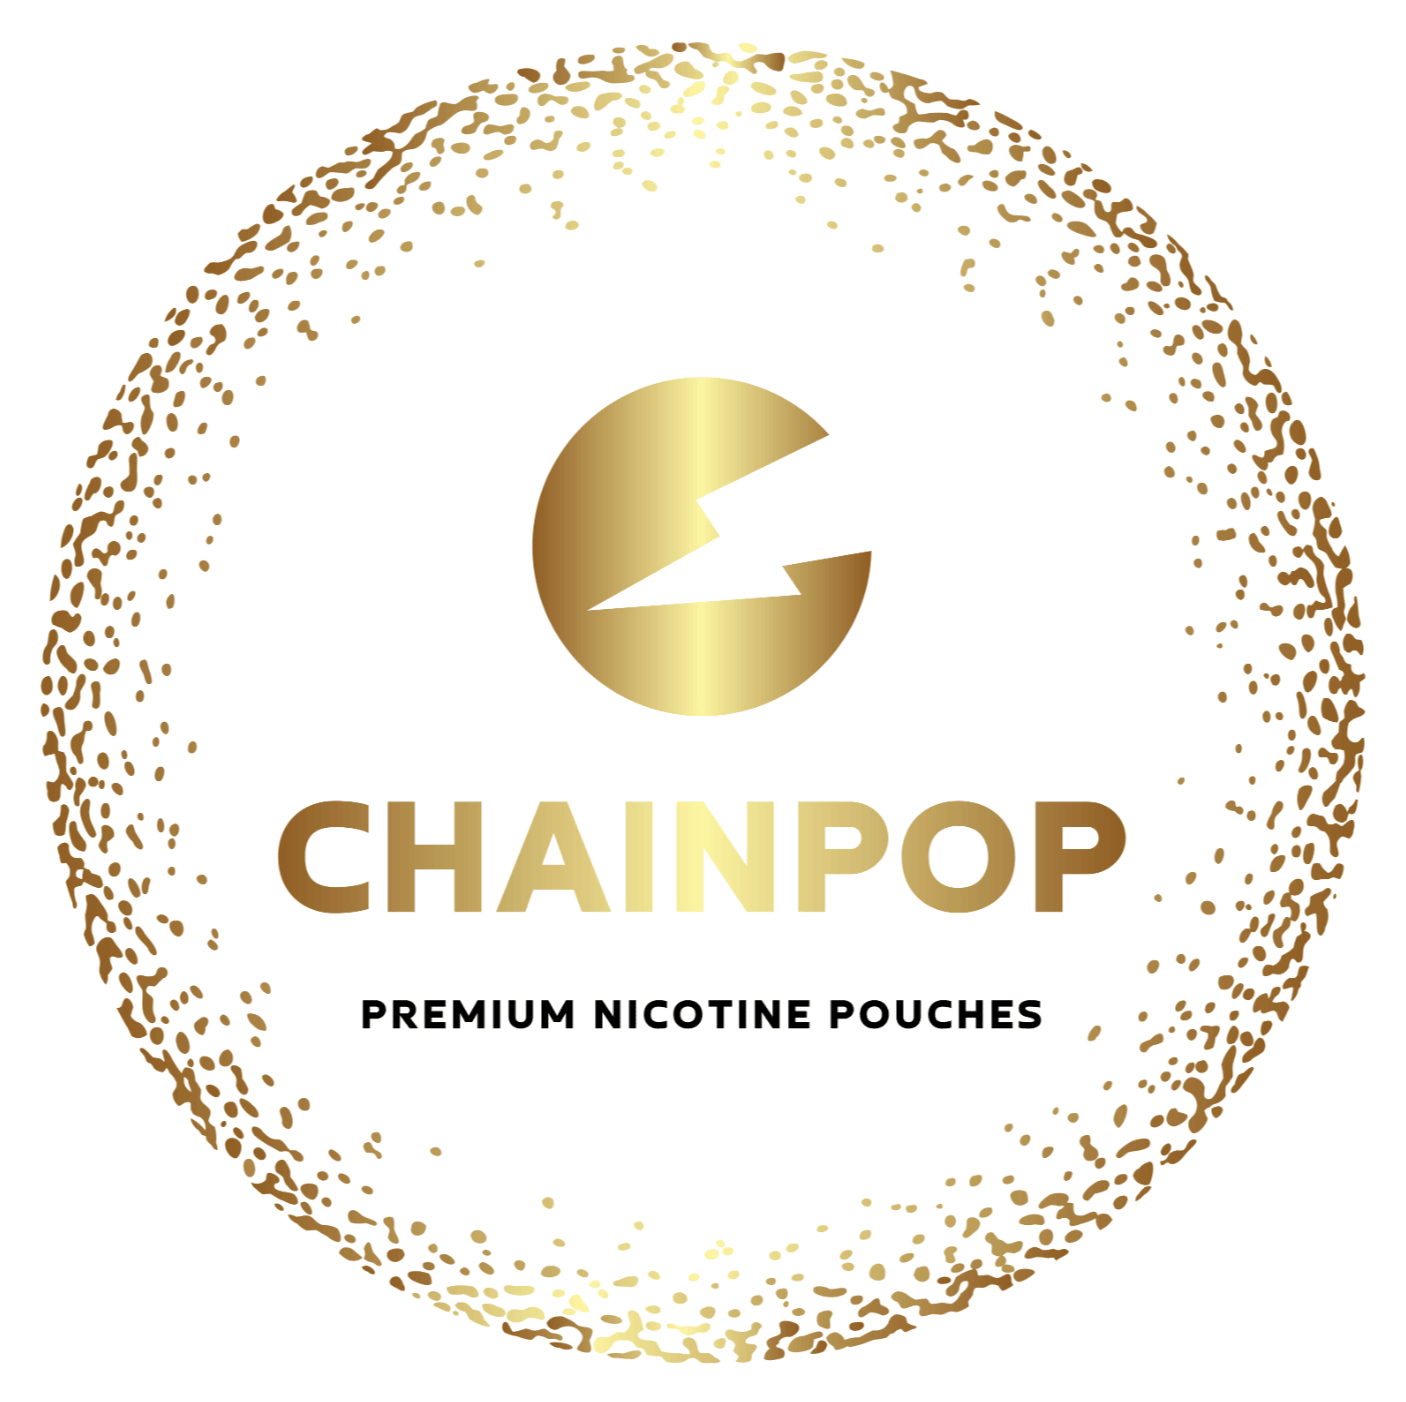 Sachets de nicotine Chainpop logo